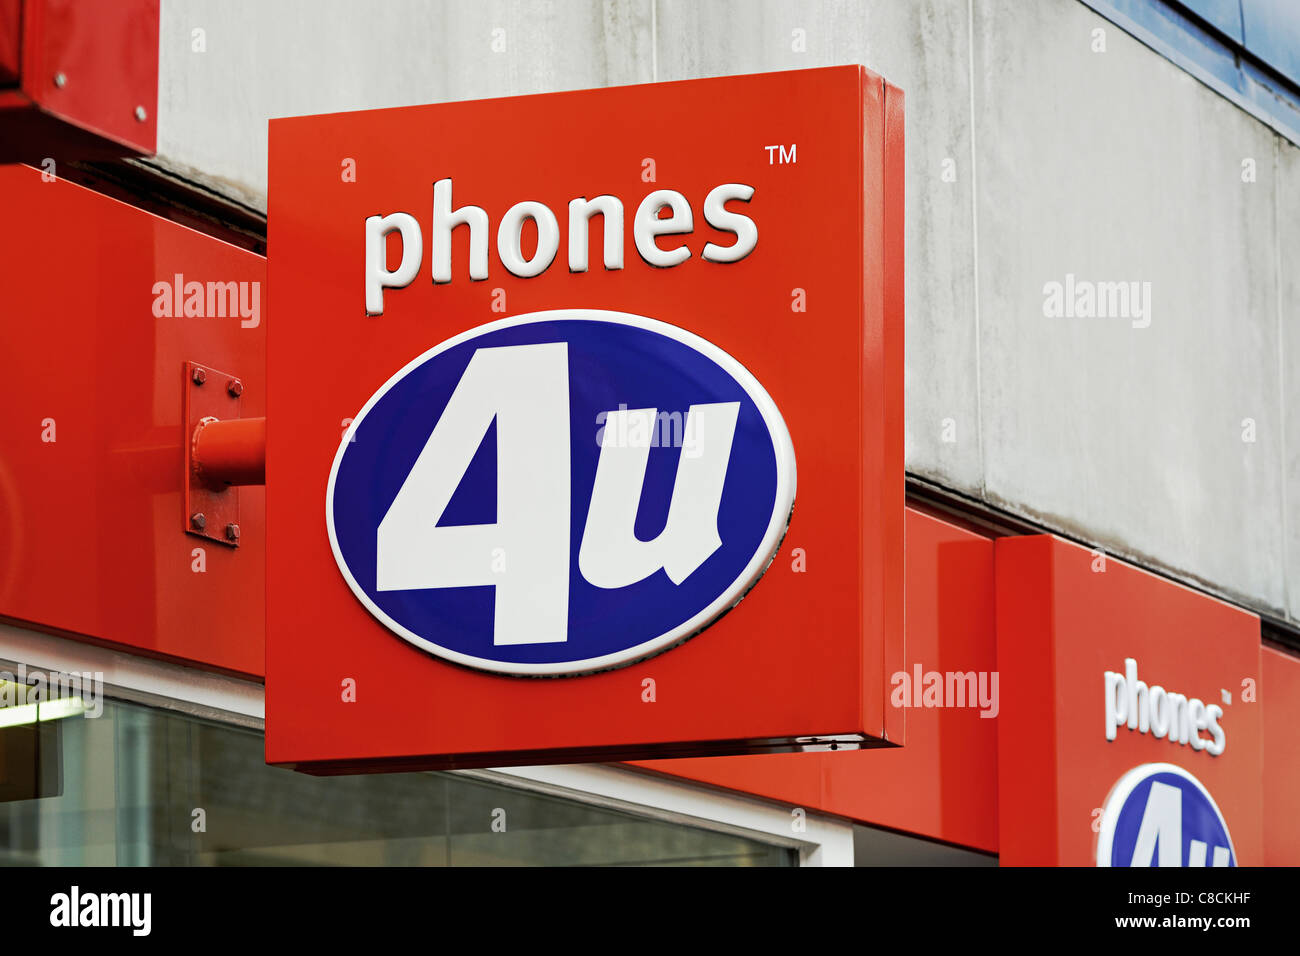 Phones 4 U Shop Sign, UK. Stock Photo